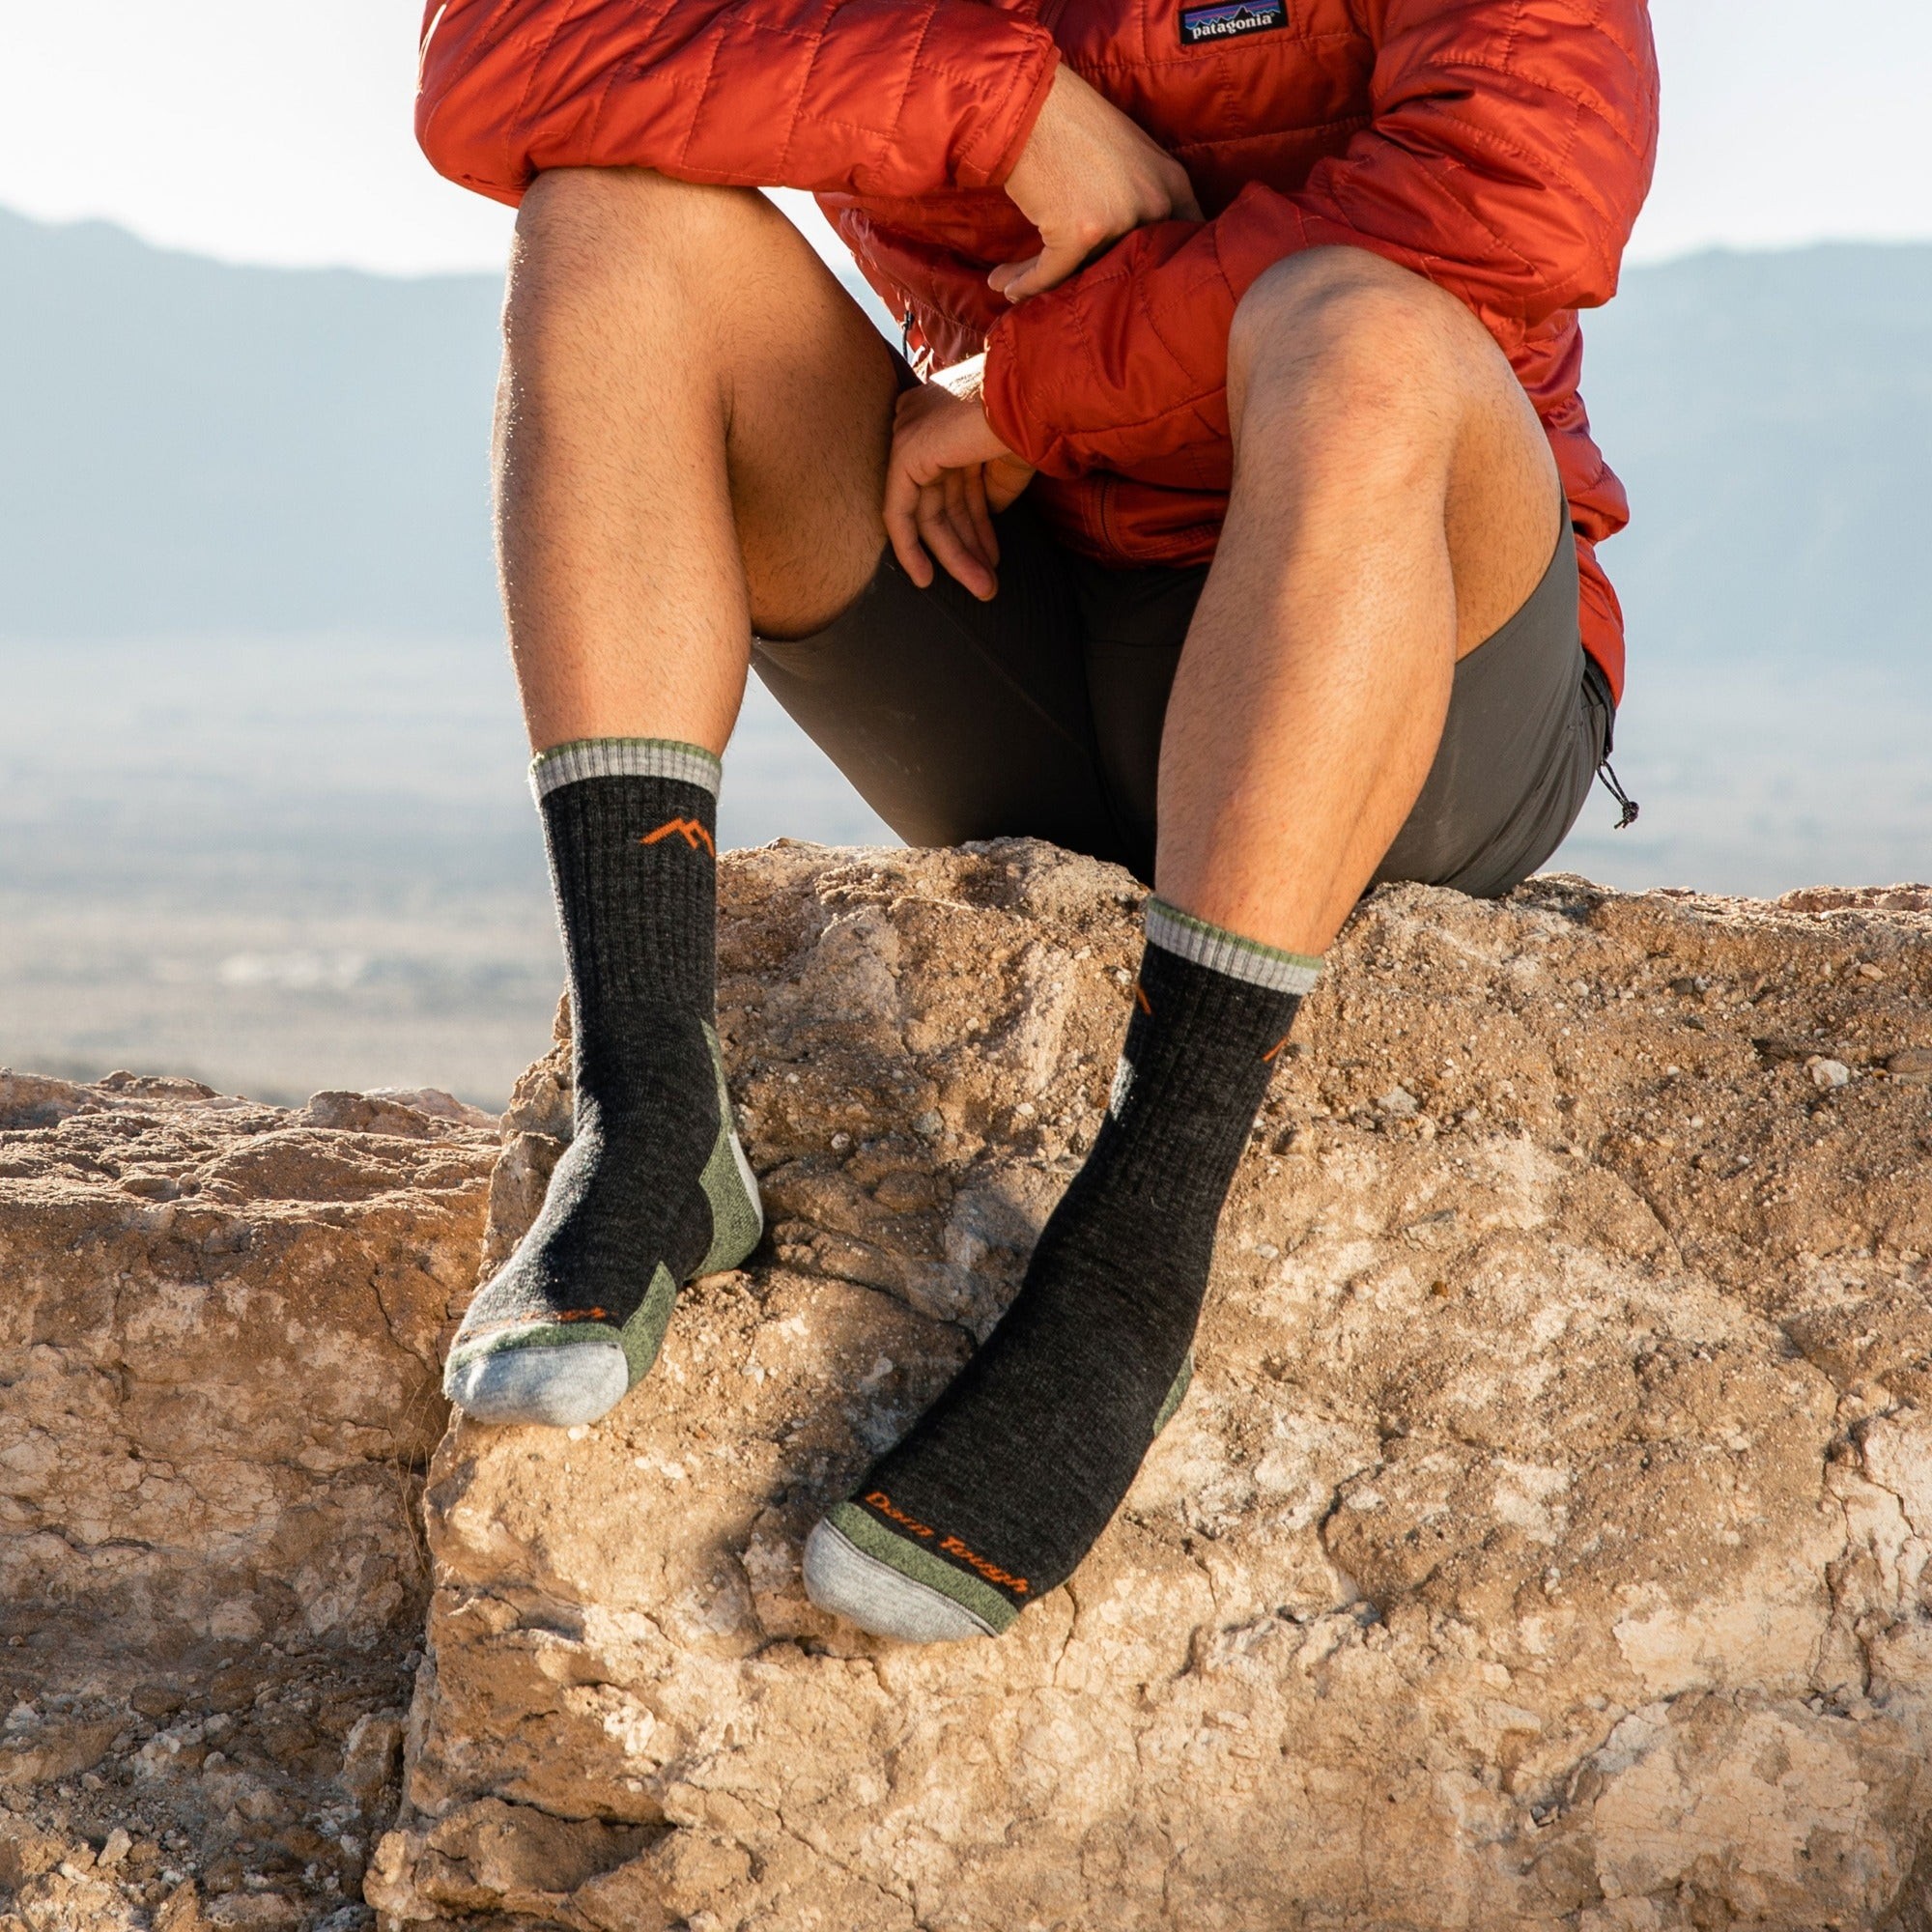 Darn Tough Mid Hiker Micro Crew Hiking Socks